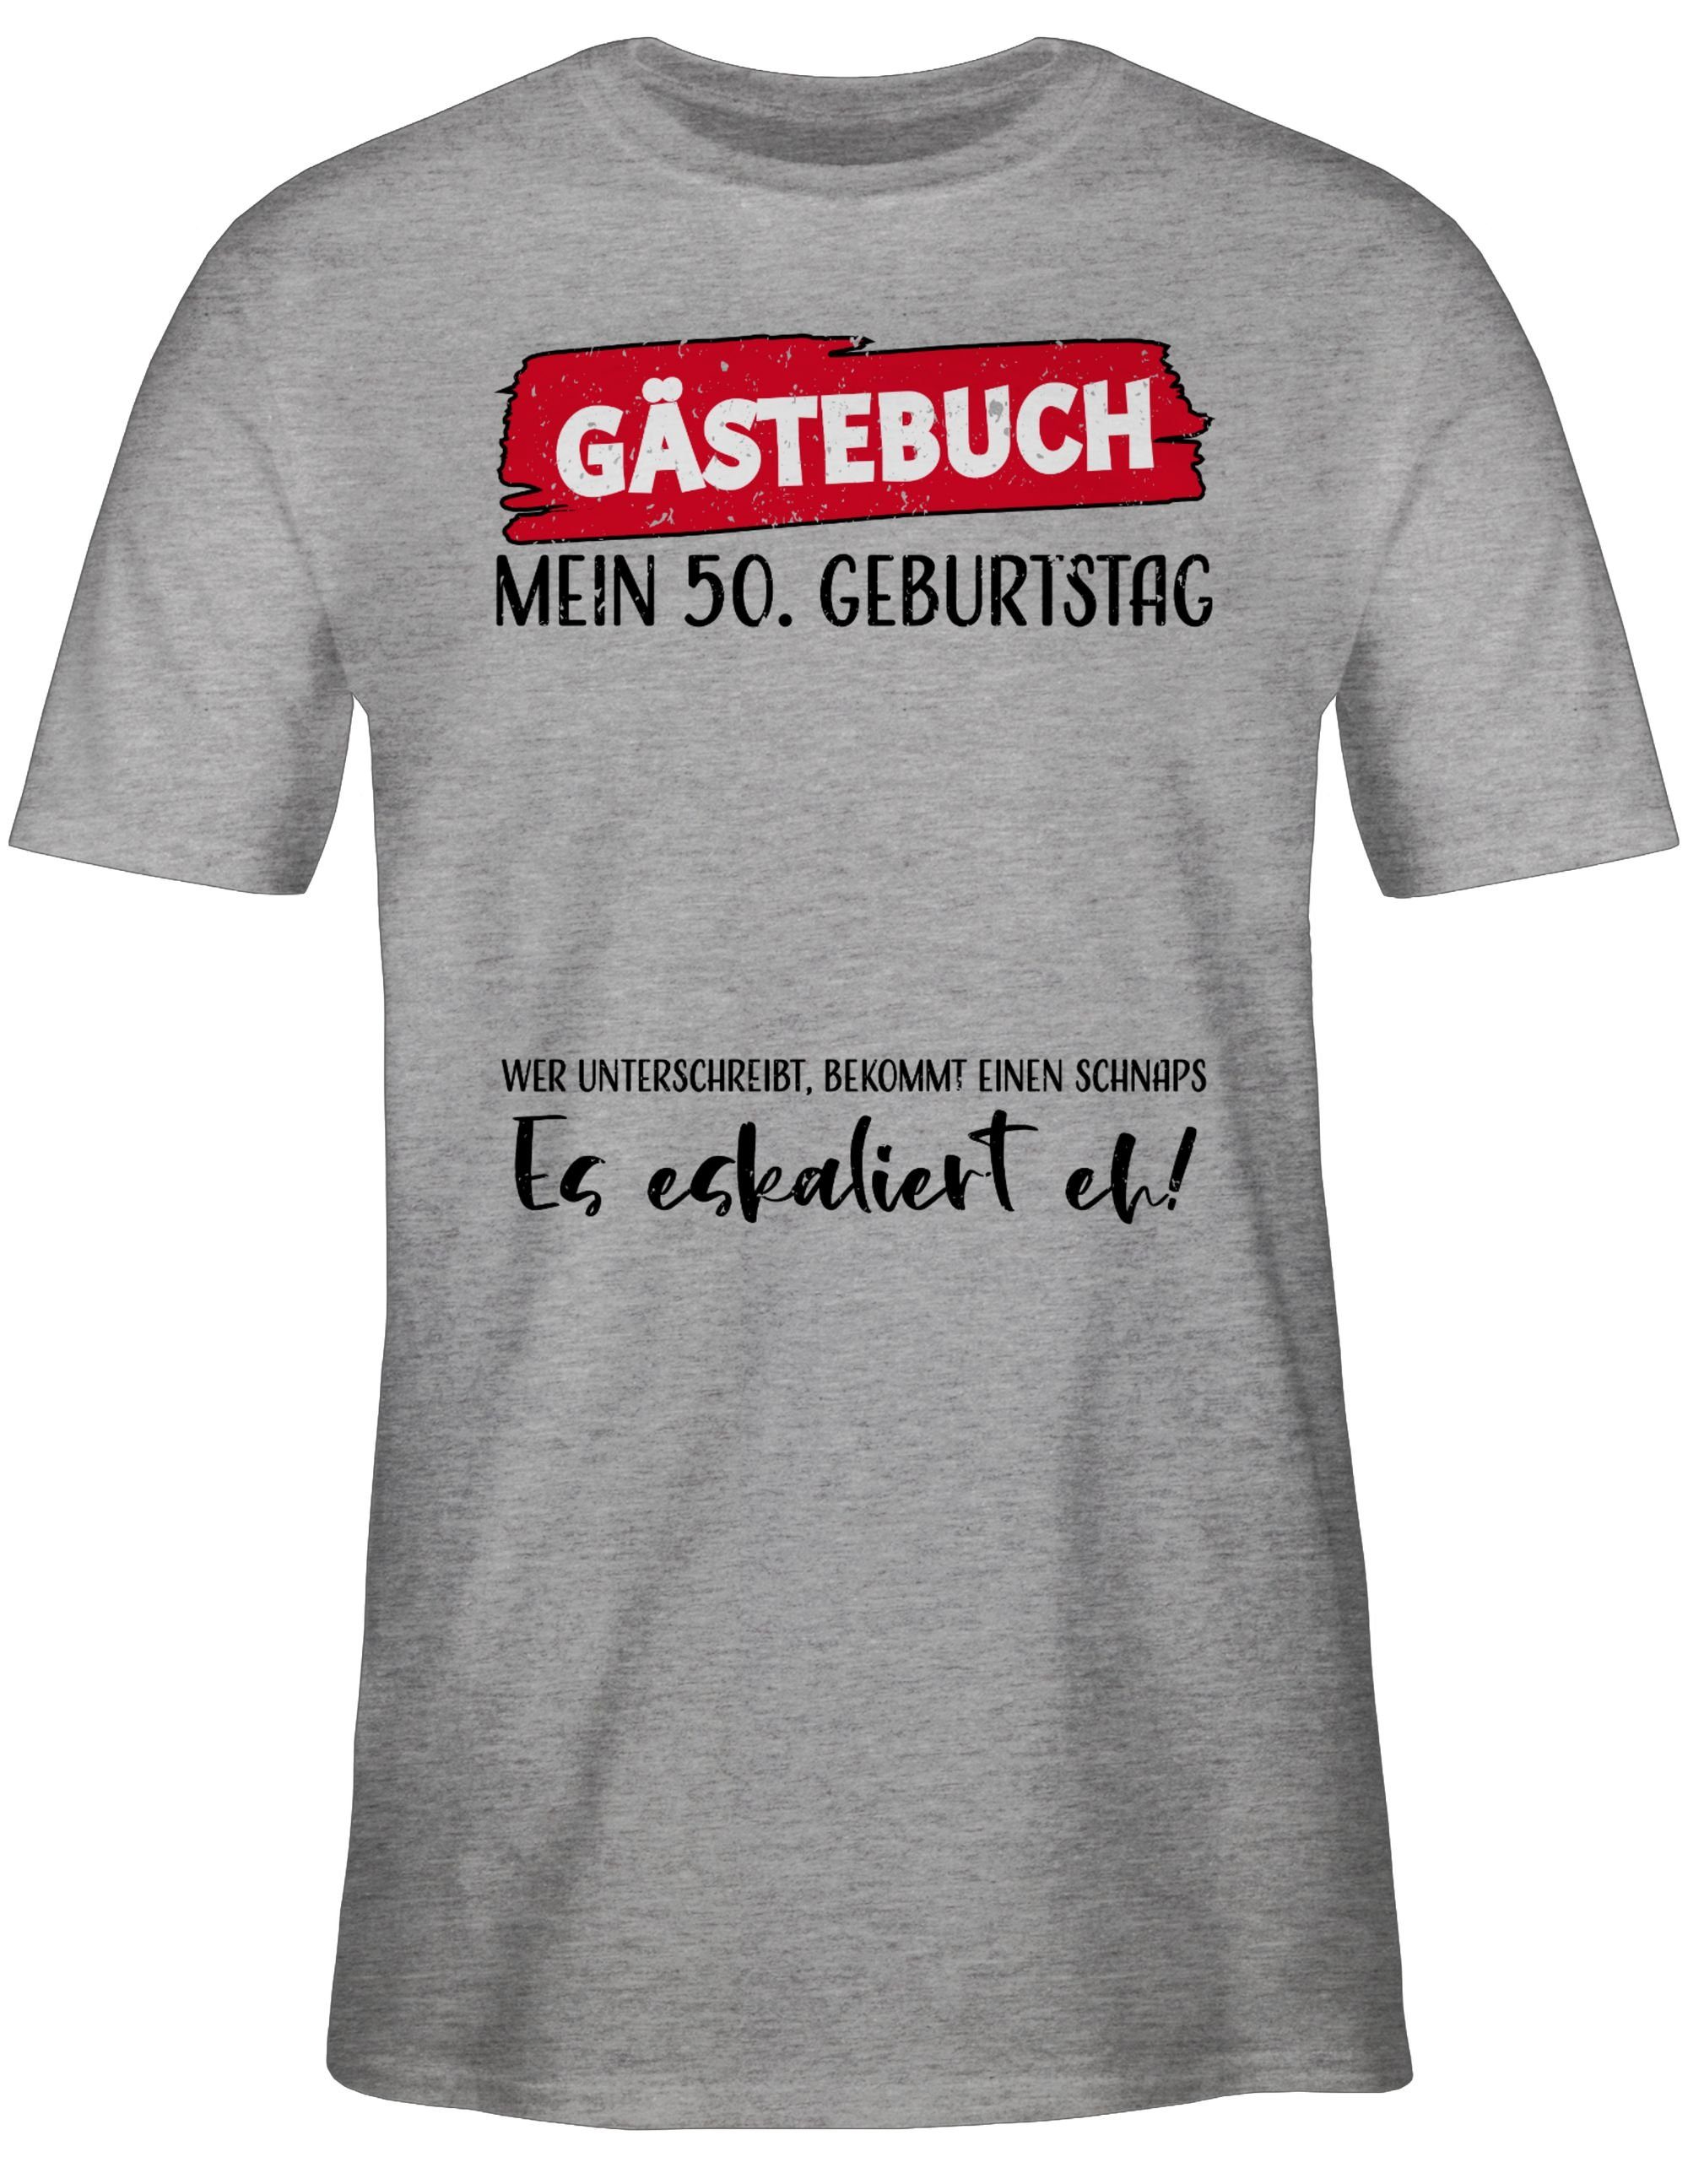 Shirtracer T-Shirt Gästebuch 50. Geburtstag Grau 50. Geburtstag meliert 01